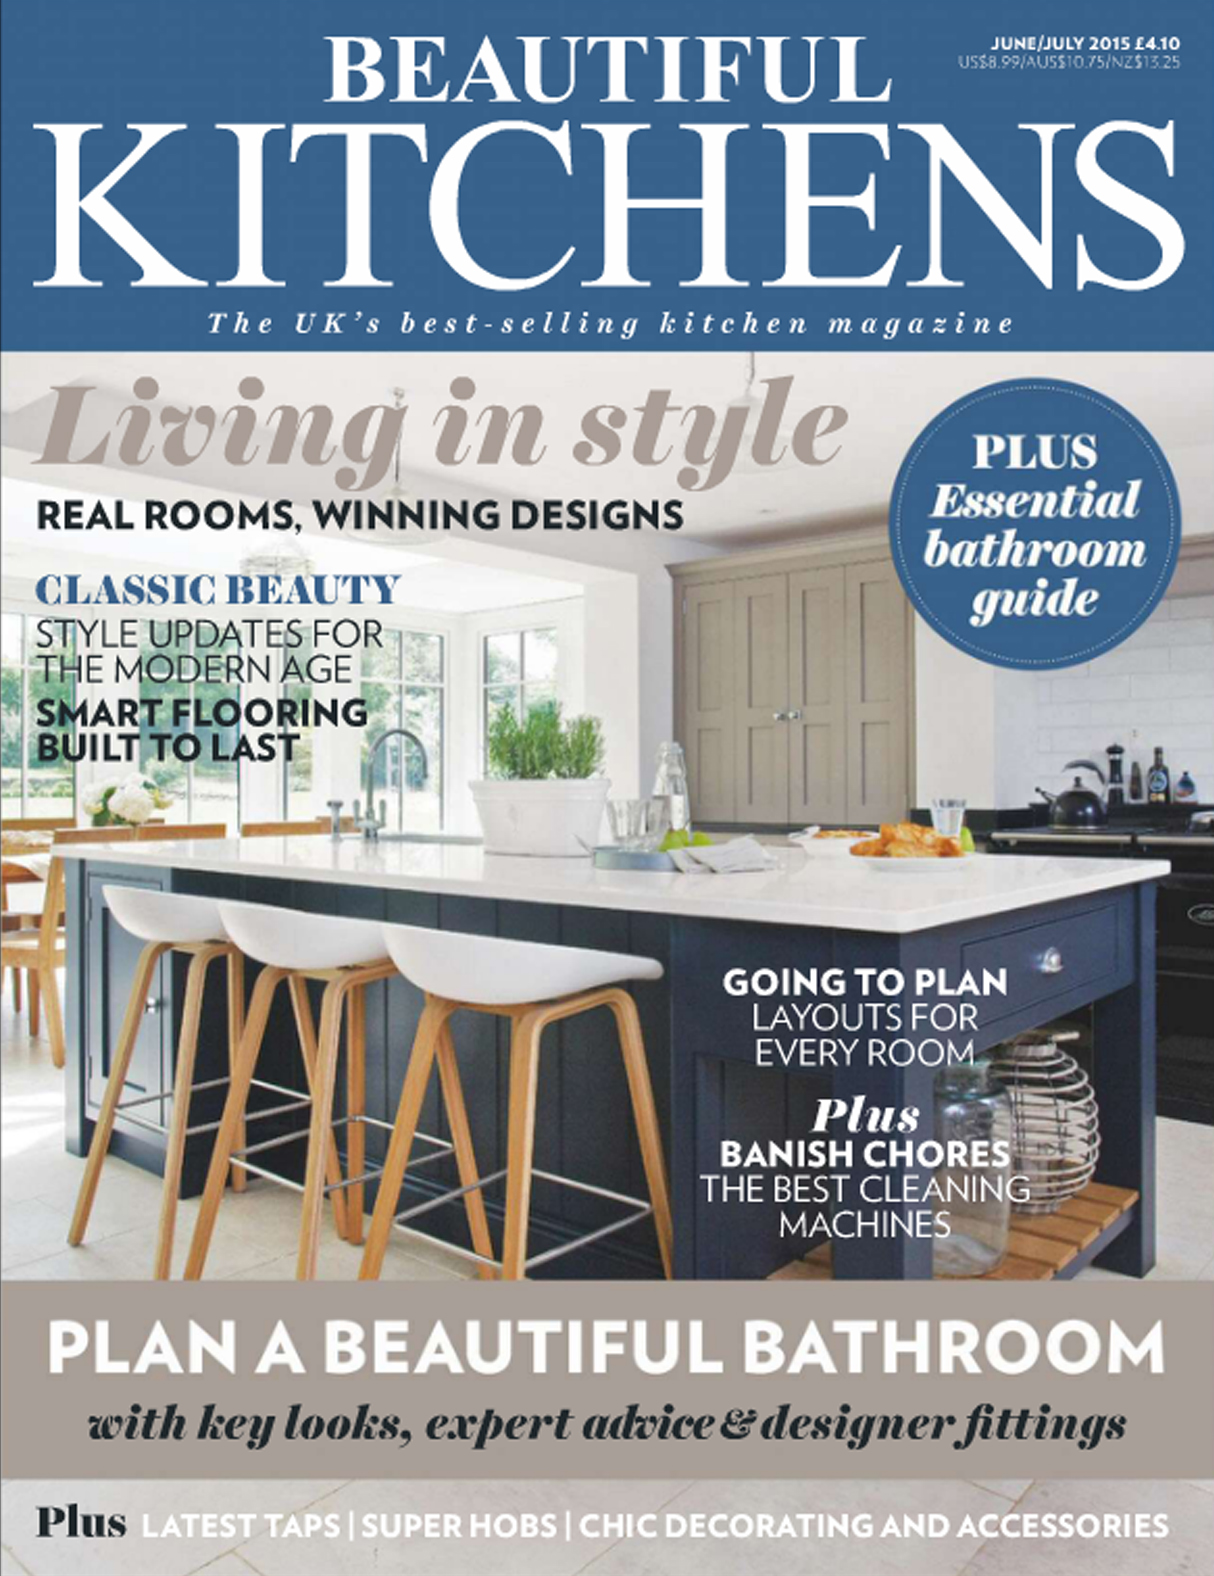 Beautiful Kitchens magazine Kingham bespoke kitchen design feature June 2015